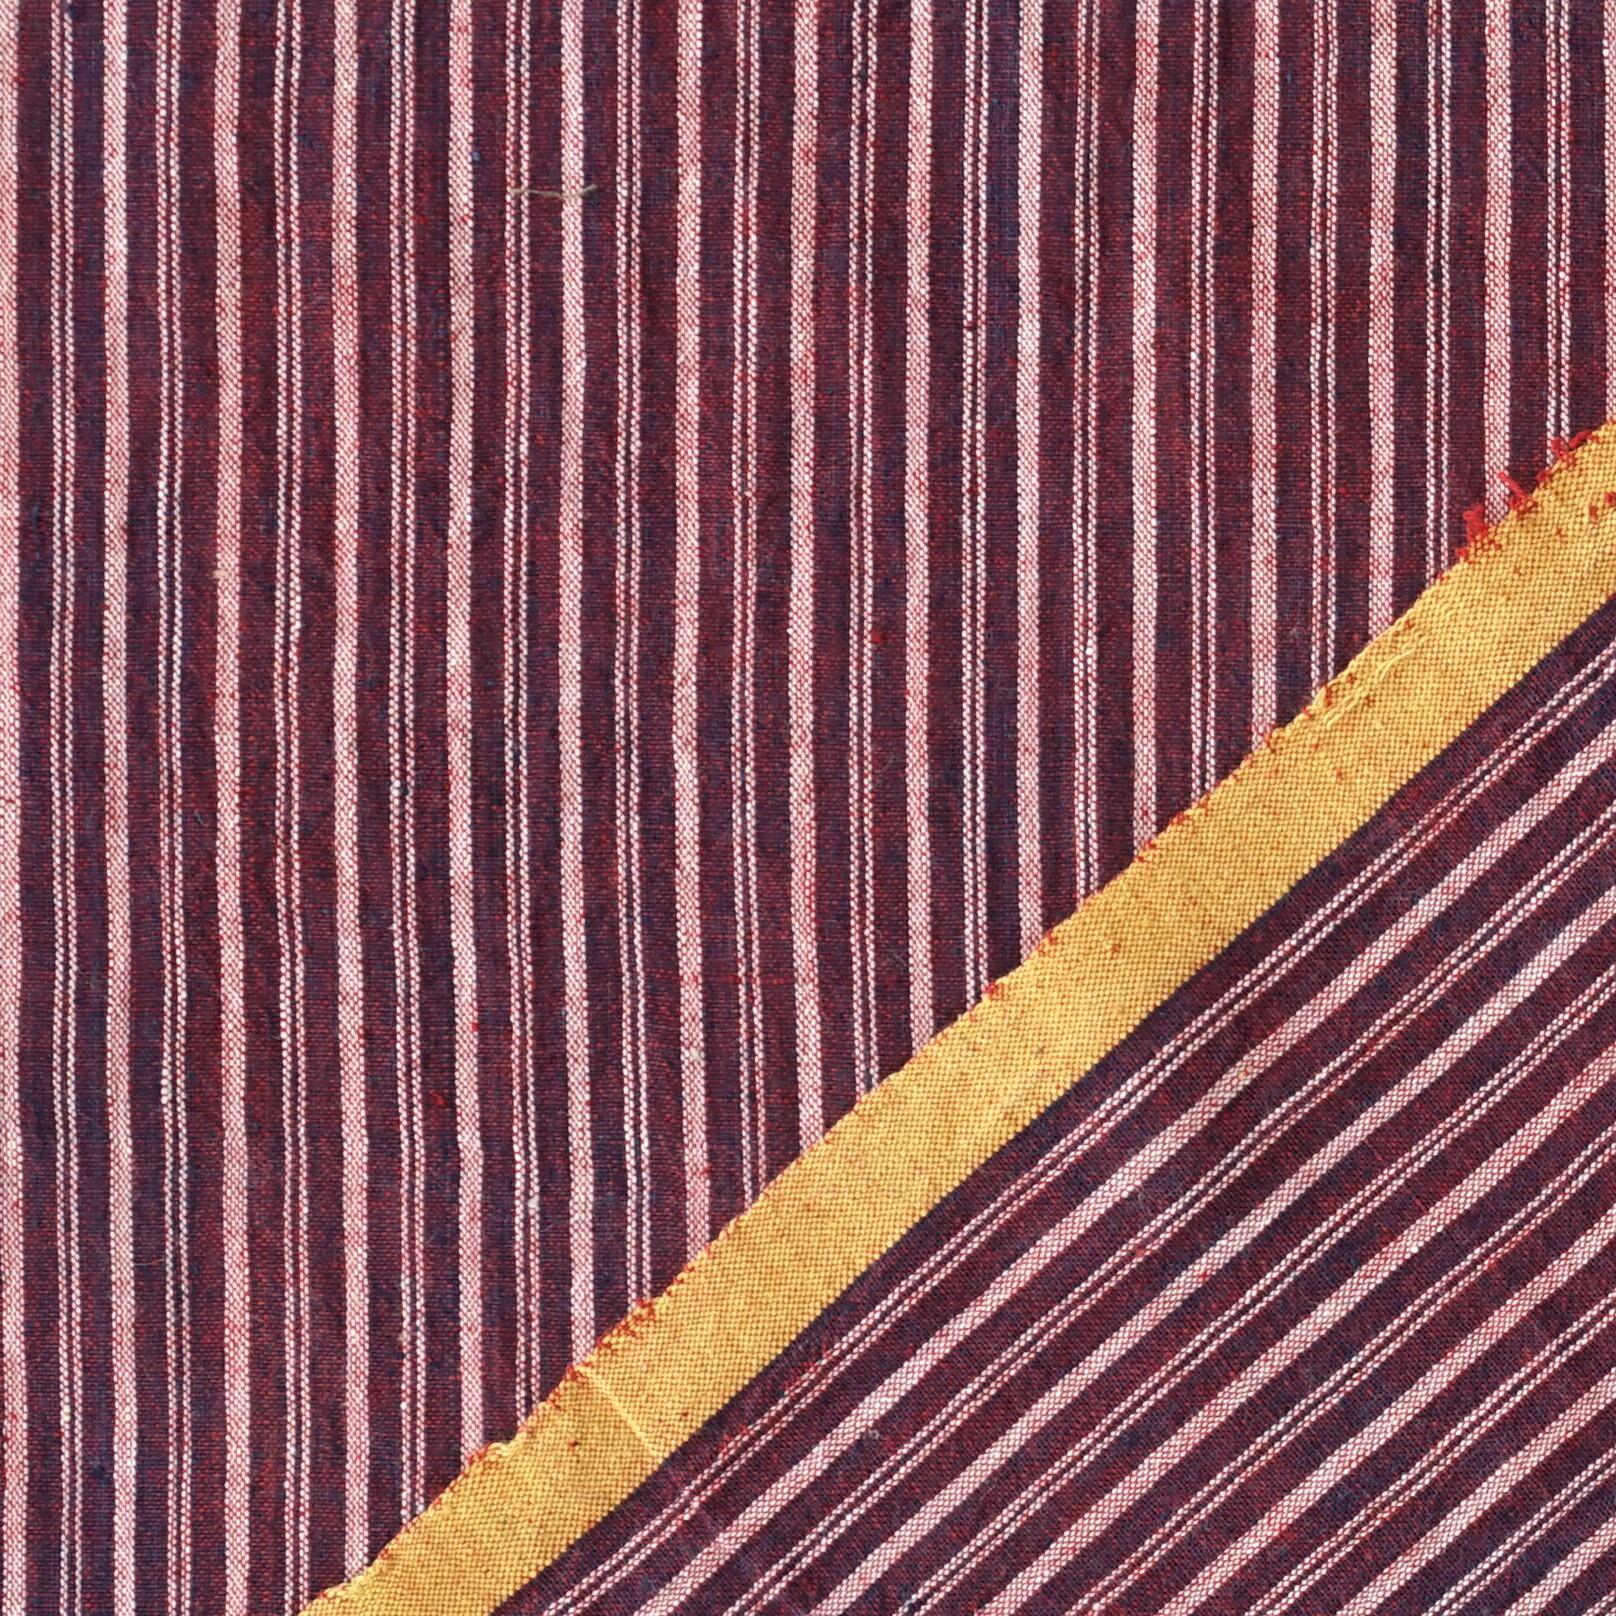 100 % Handloom Woven Cotton - Cross Colour - Pomegranate Yellow Warp, Red Alizarin Weft - Selvedge